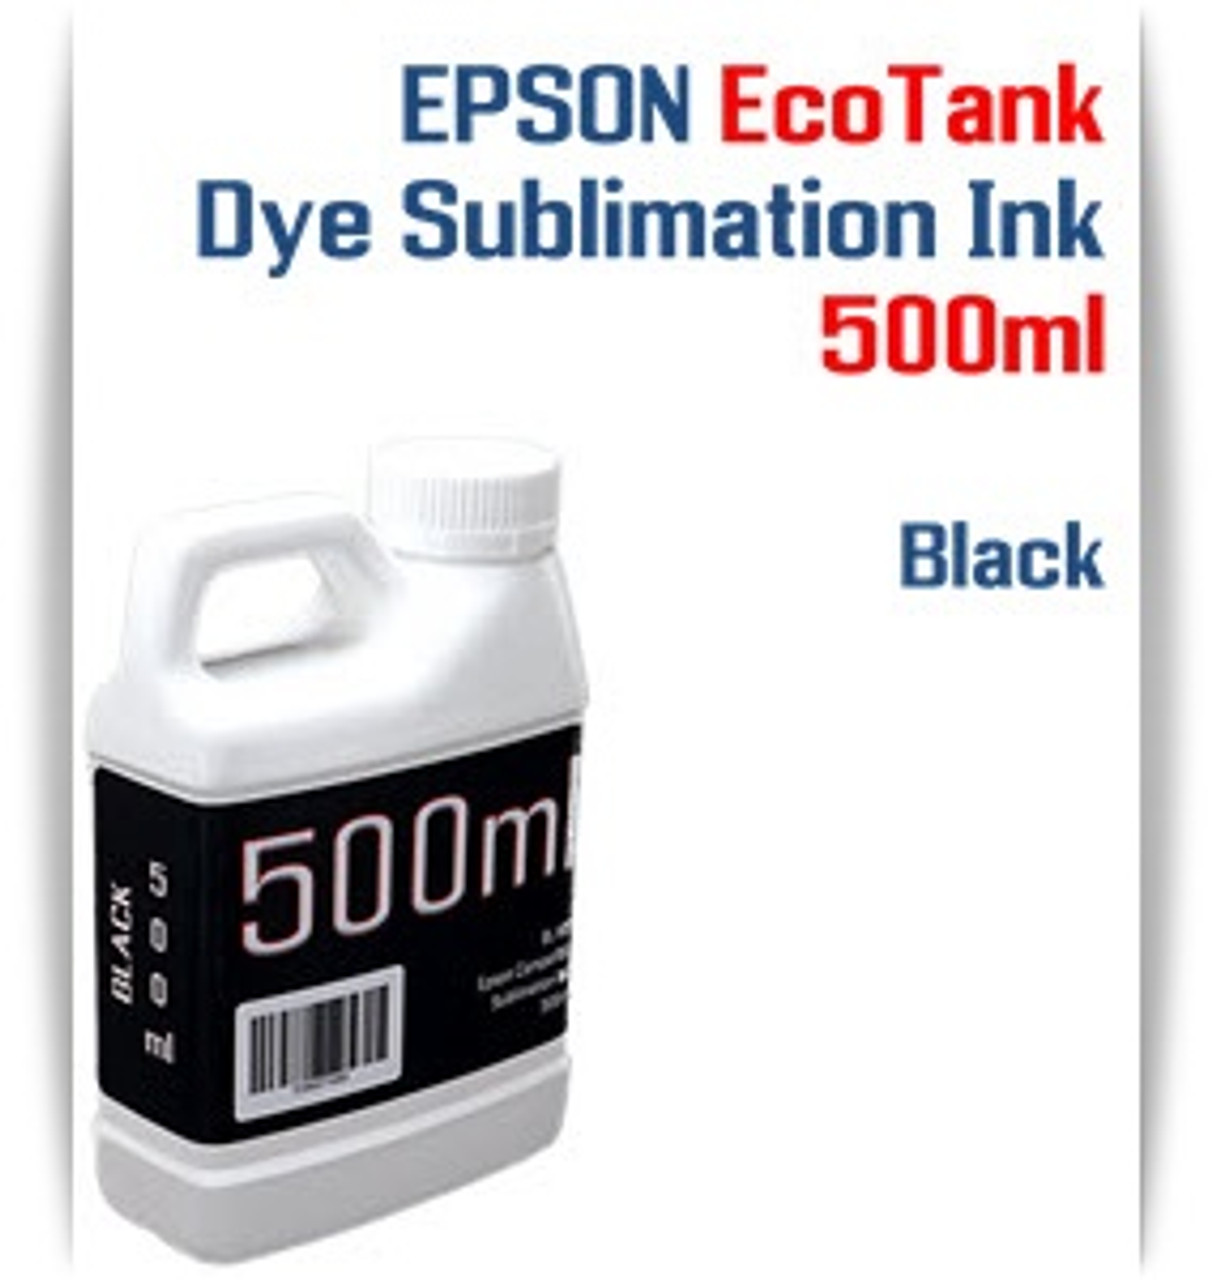 Black EPSON EcoTank printer Dye Sublimation Ink 500ml bottles